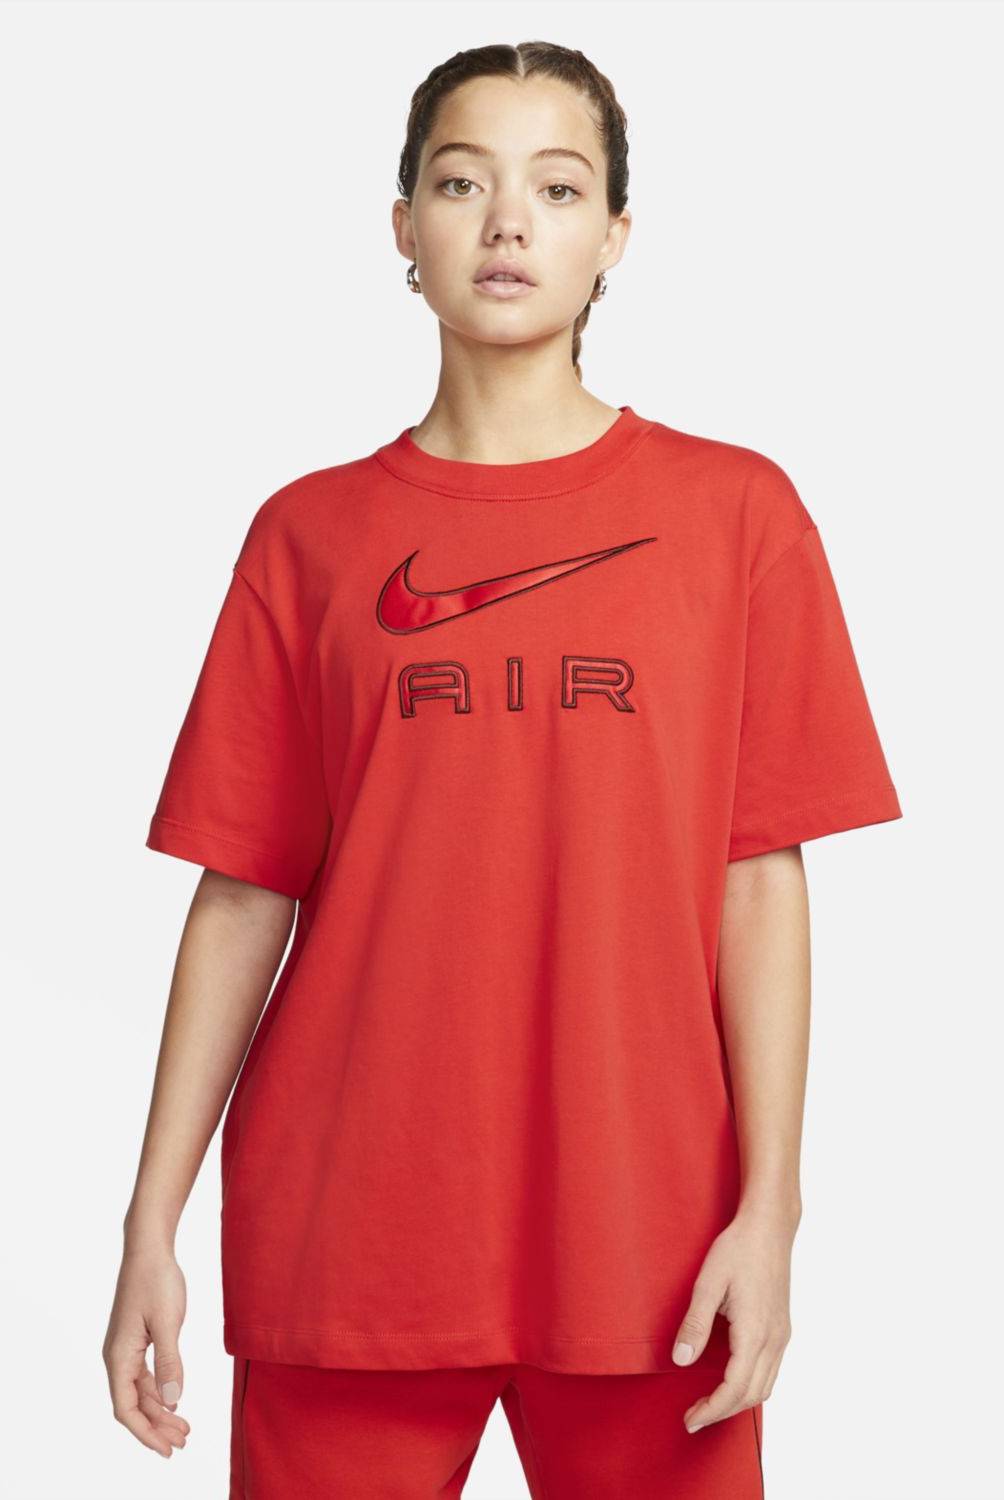 NIKE - Nike Sports T-Shirts Mujer